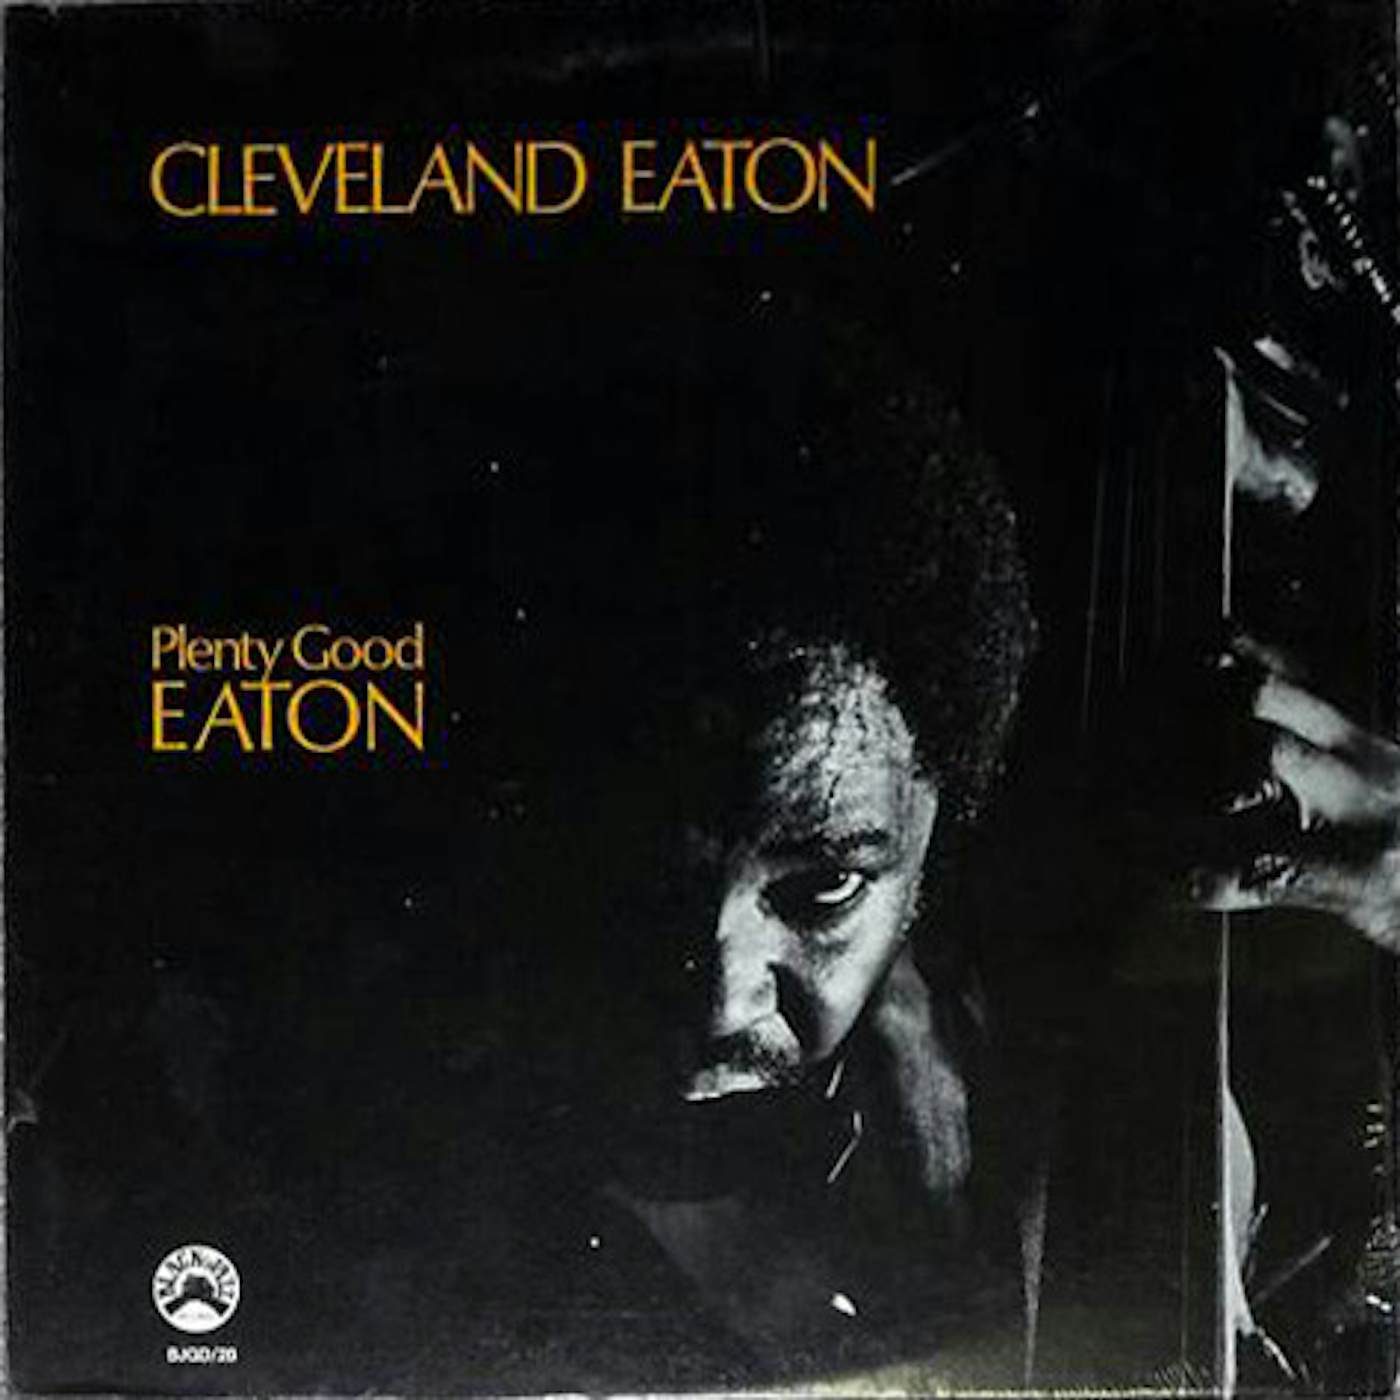 Cleveland Eaton PLENTY GOOD EATON (REMASTERED VINYL EDITION) Vinyl Record